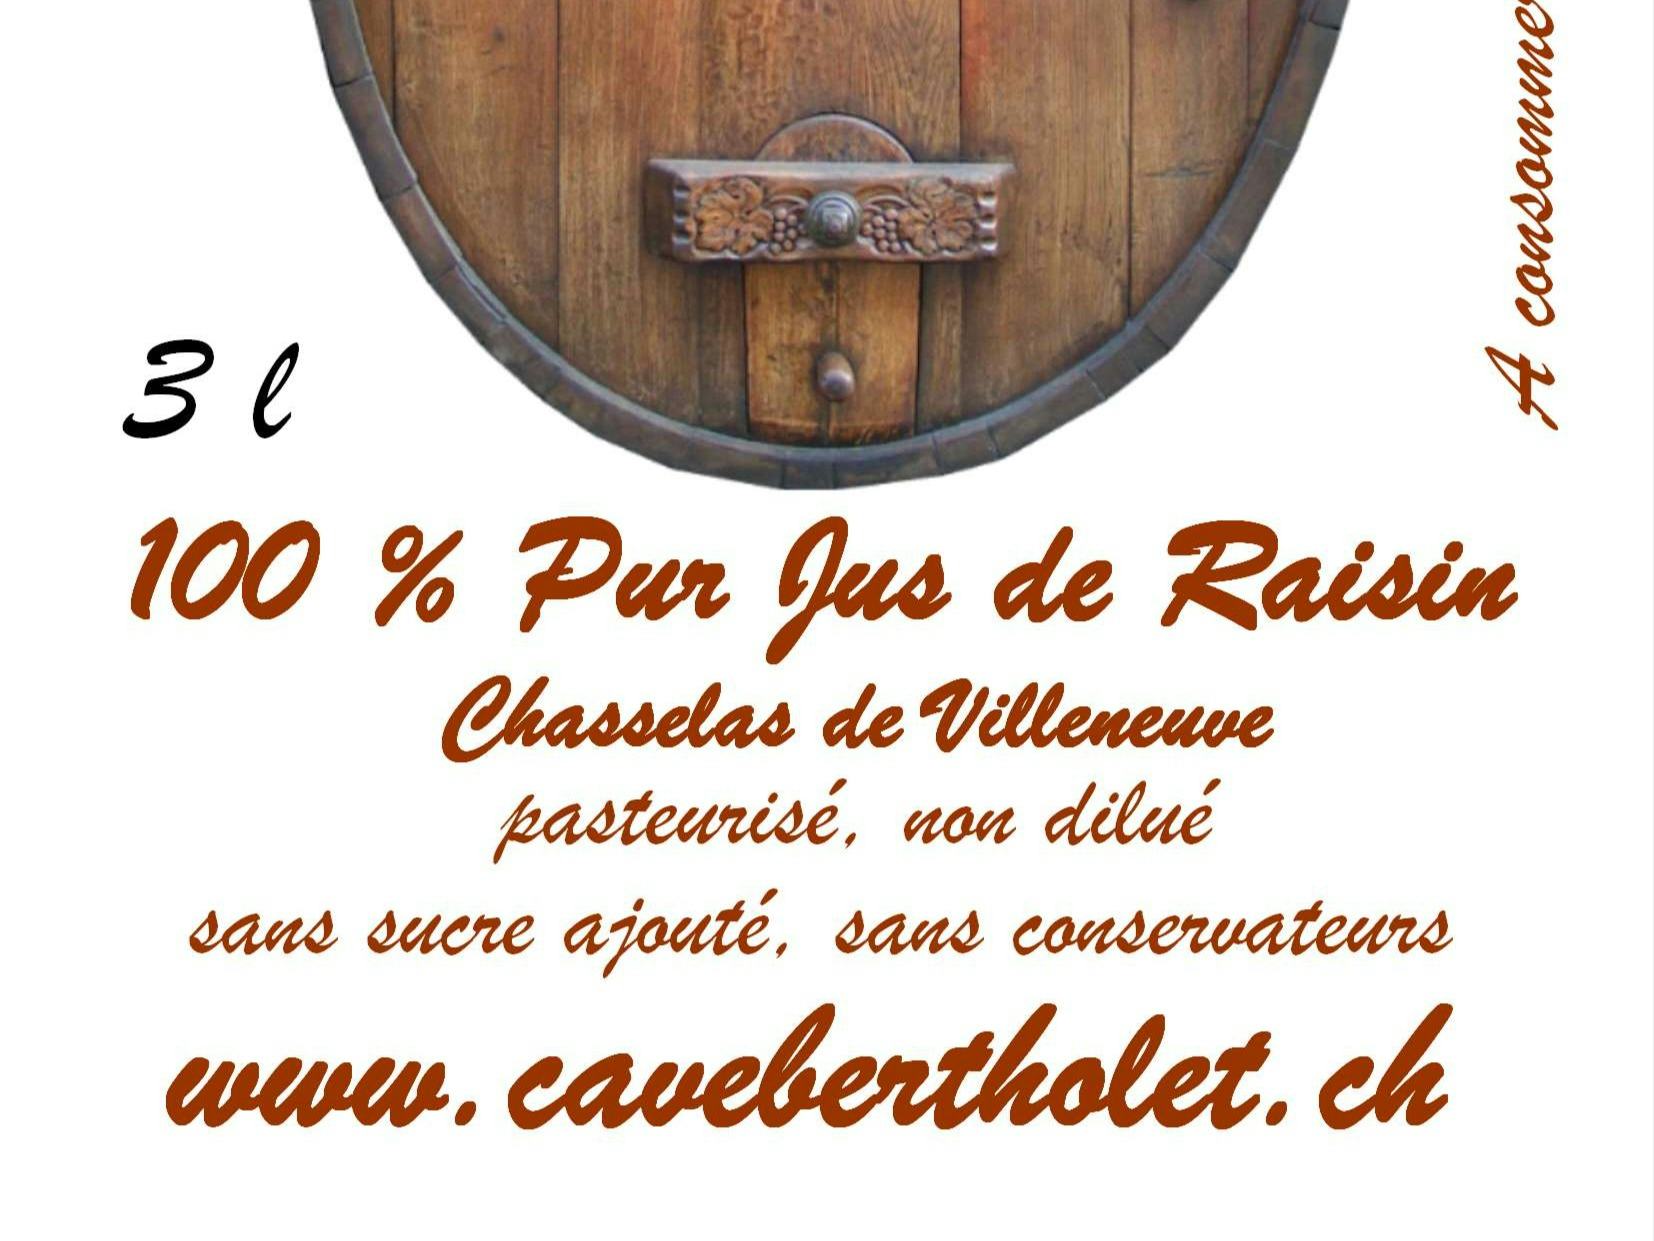 Jus de raisin, artisanal product for direct sale in Switzerland